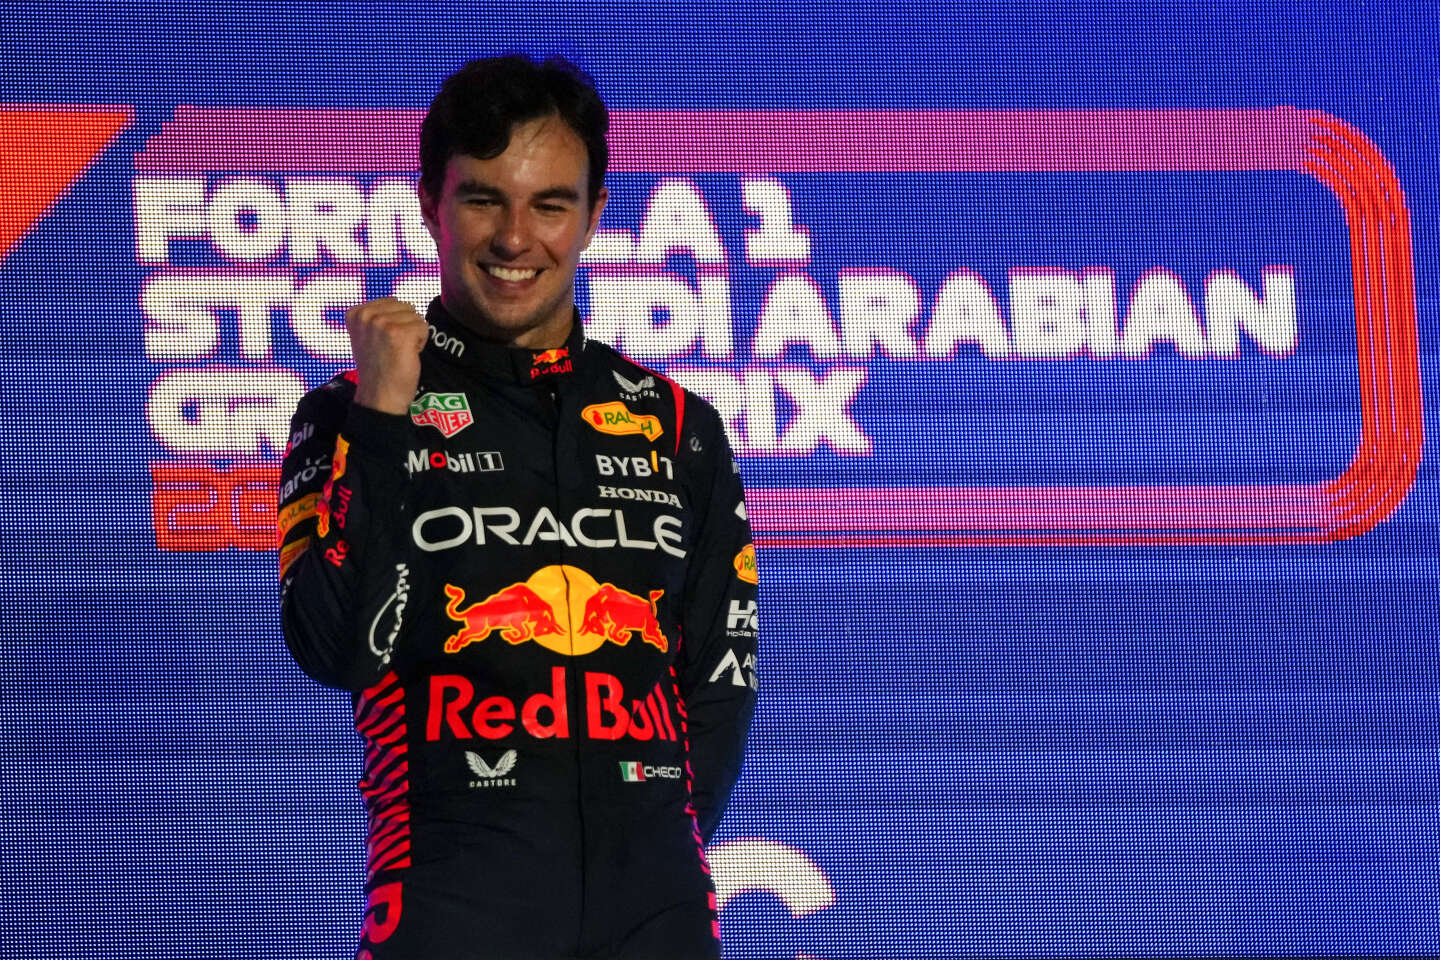 Pérez beats Verstappen at the Saudi Arabian Grand Prix